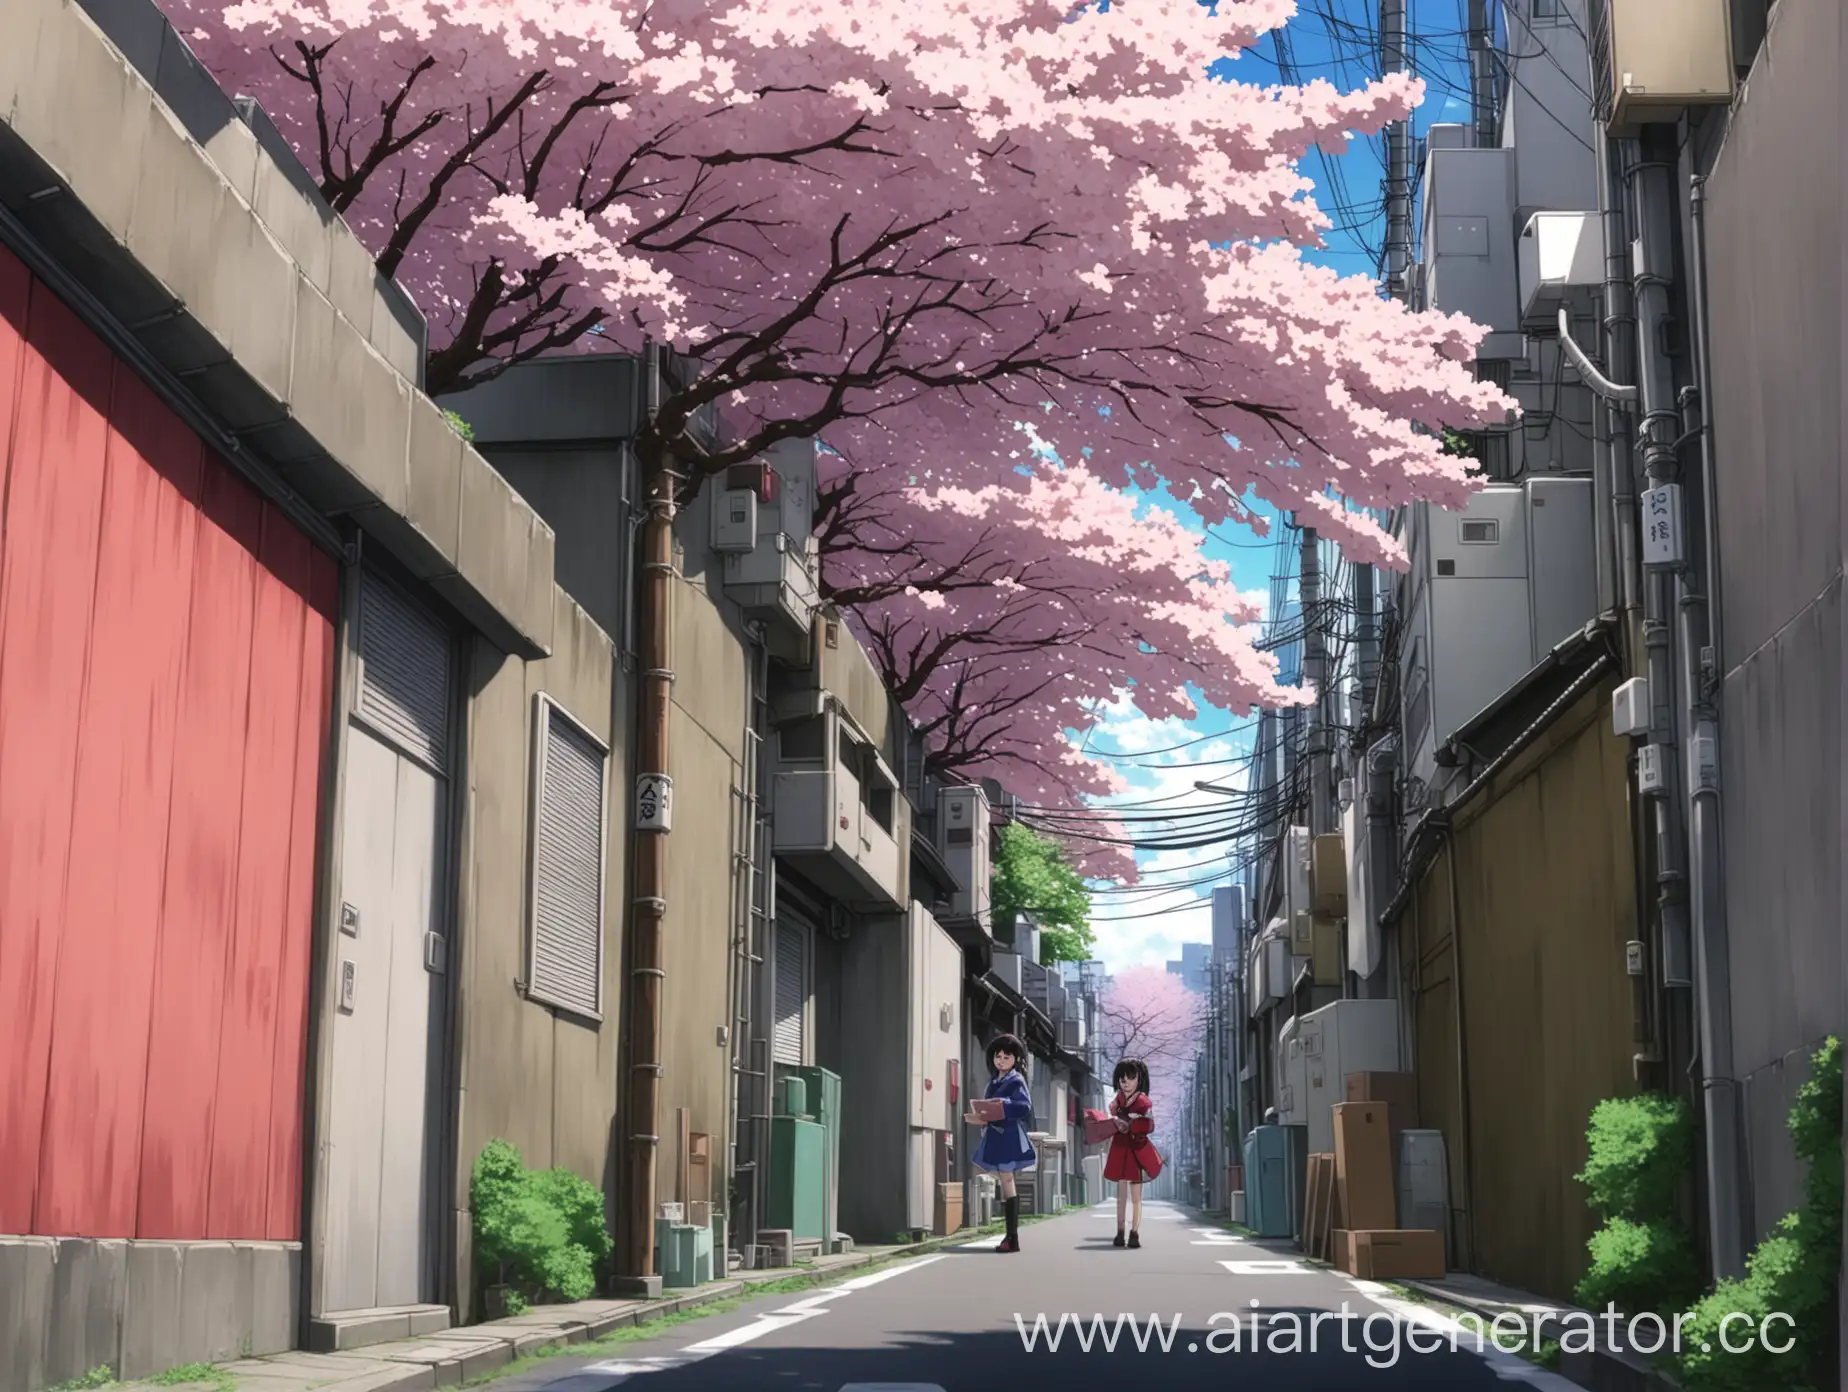 кадры из аниме на аллейка с сакурами в токио